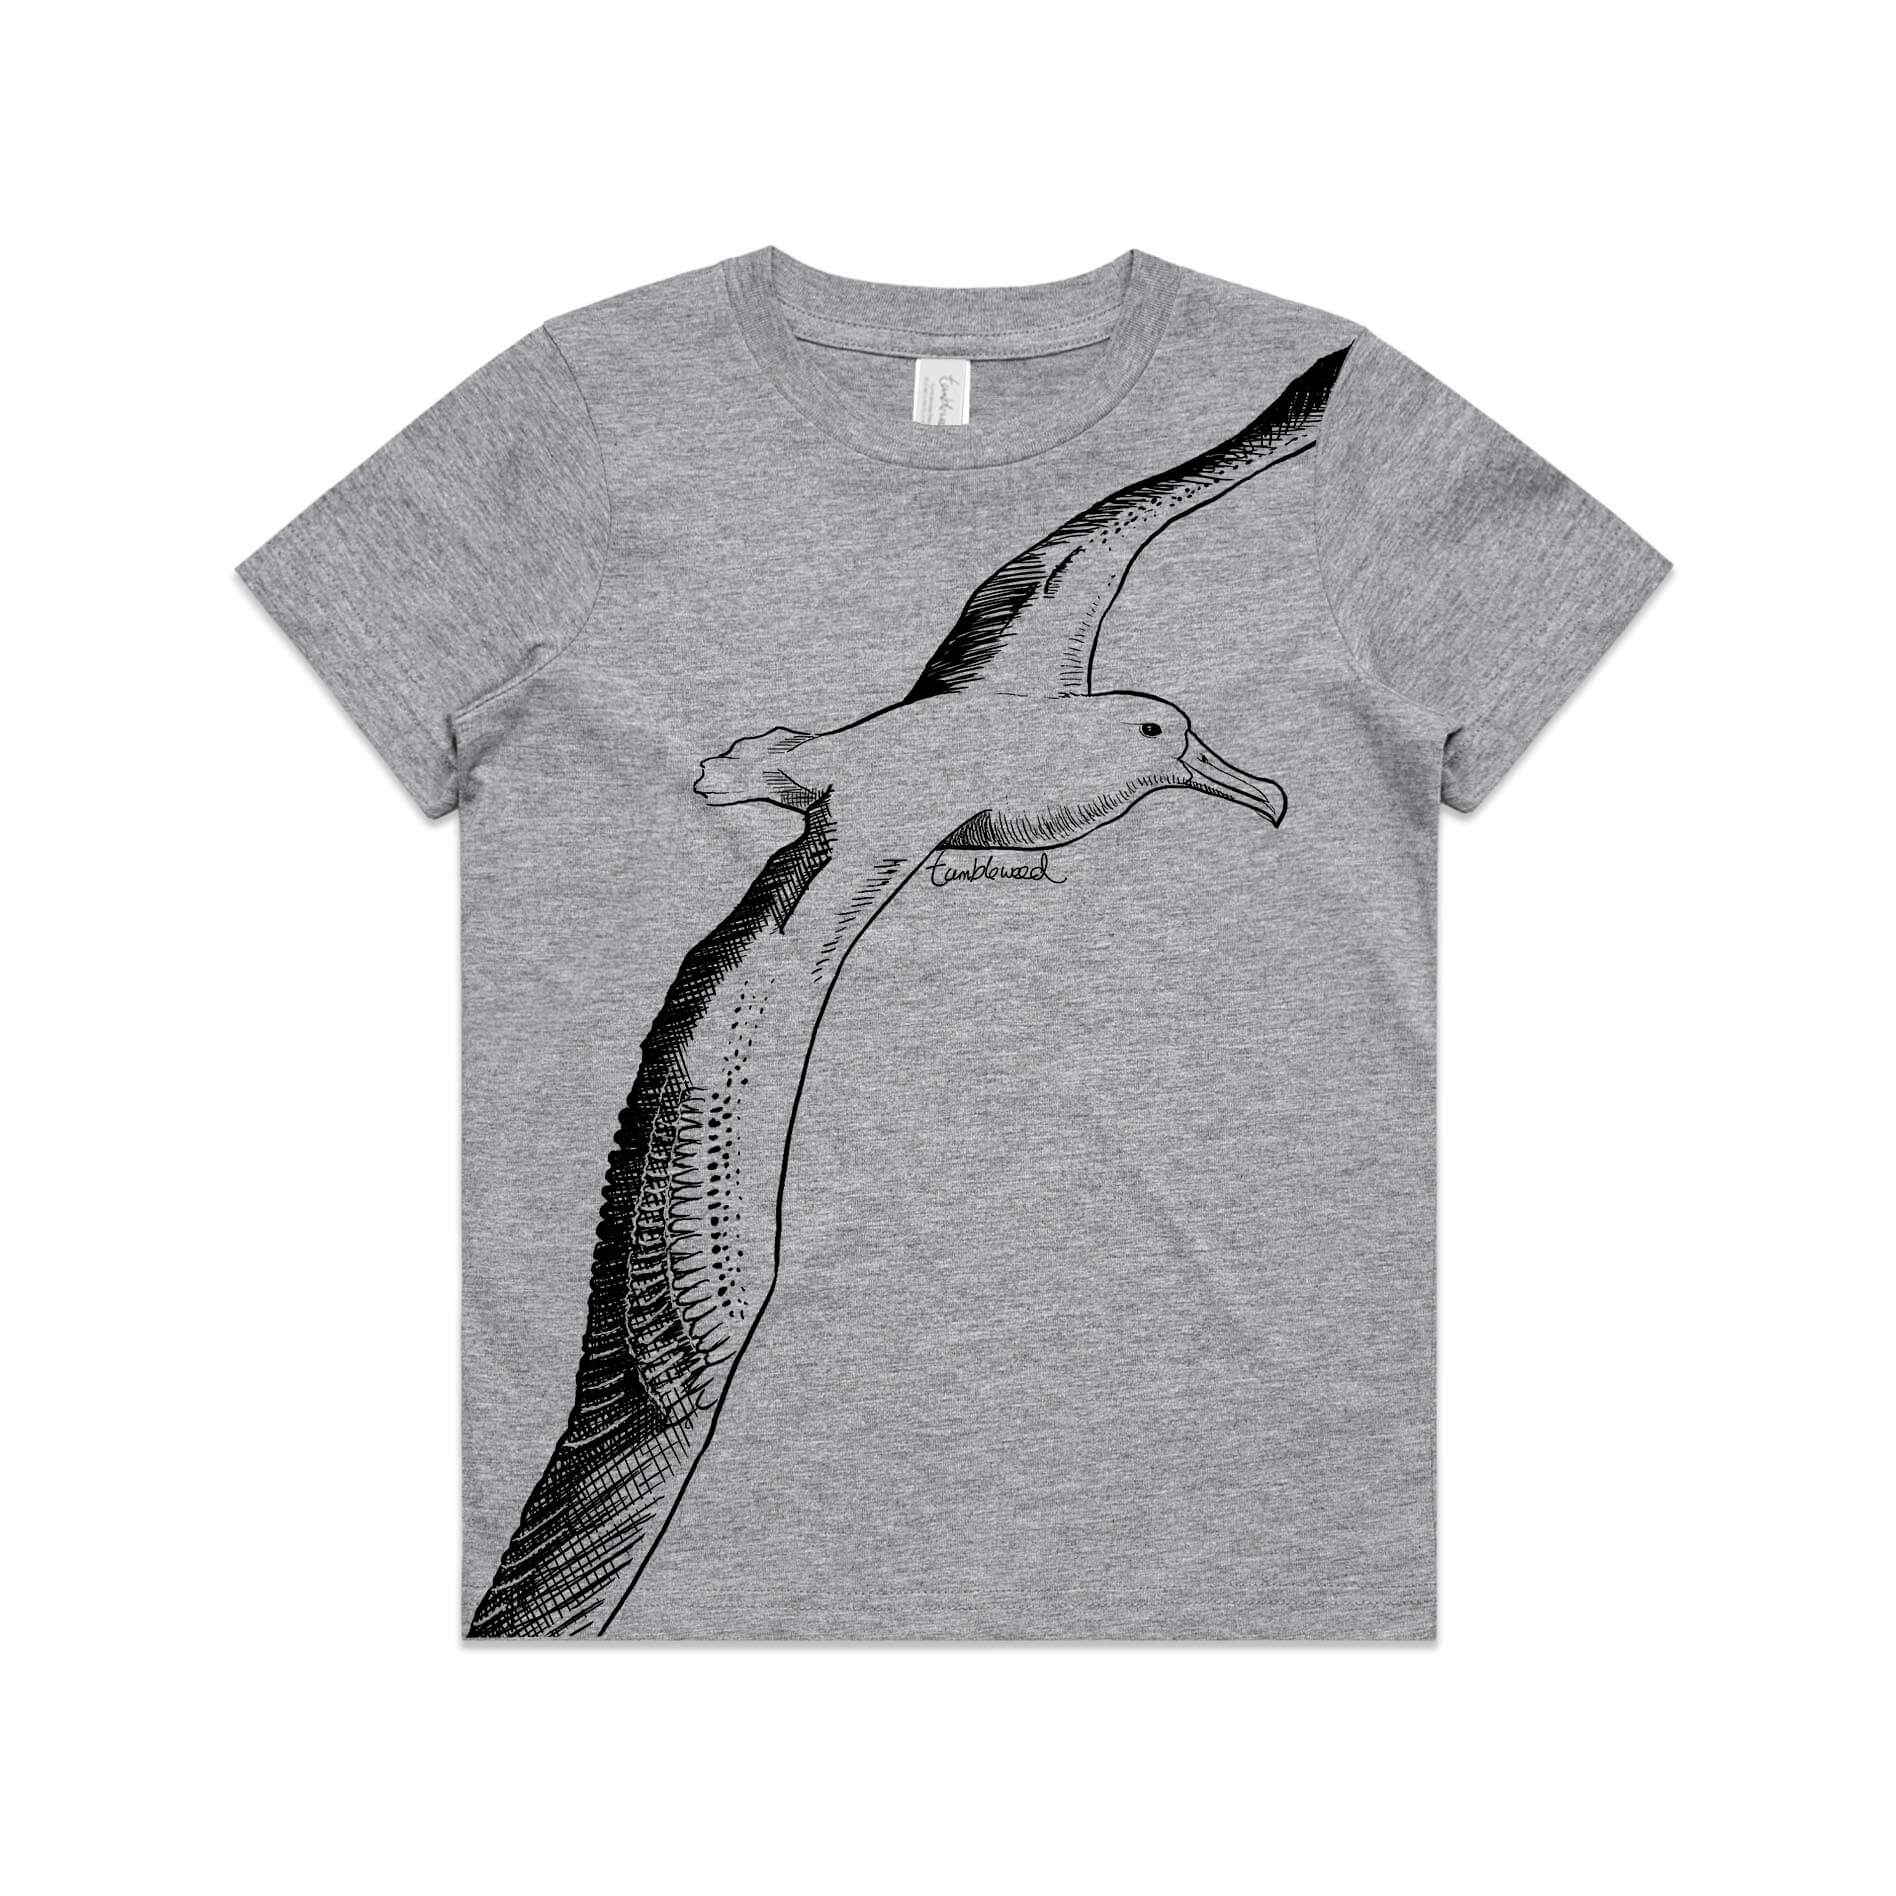 Grey marle, cotton kids' t-shirt with screen printed albatross design.